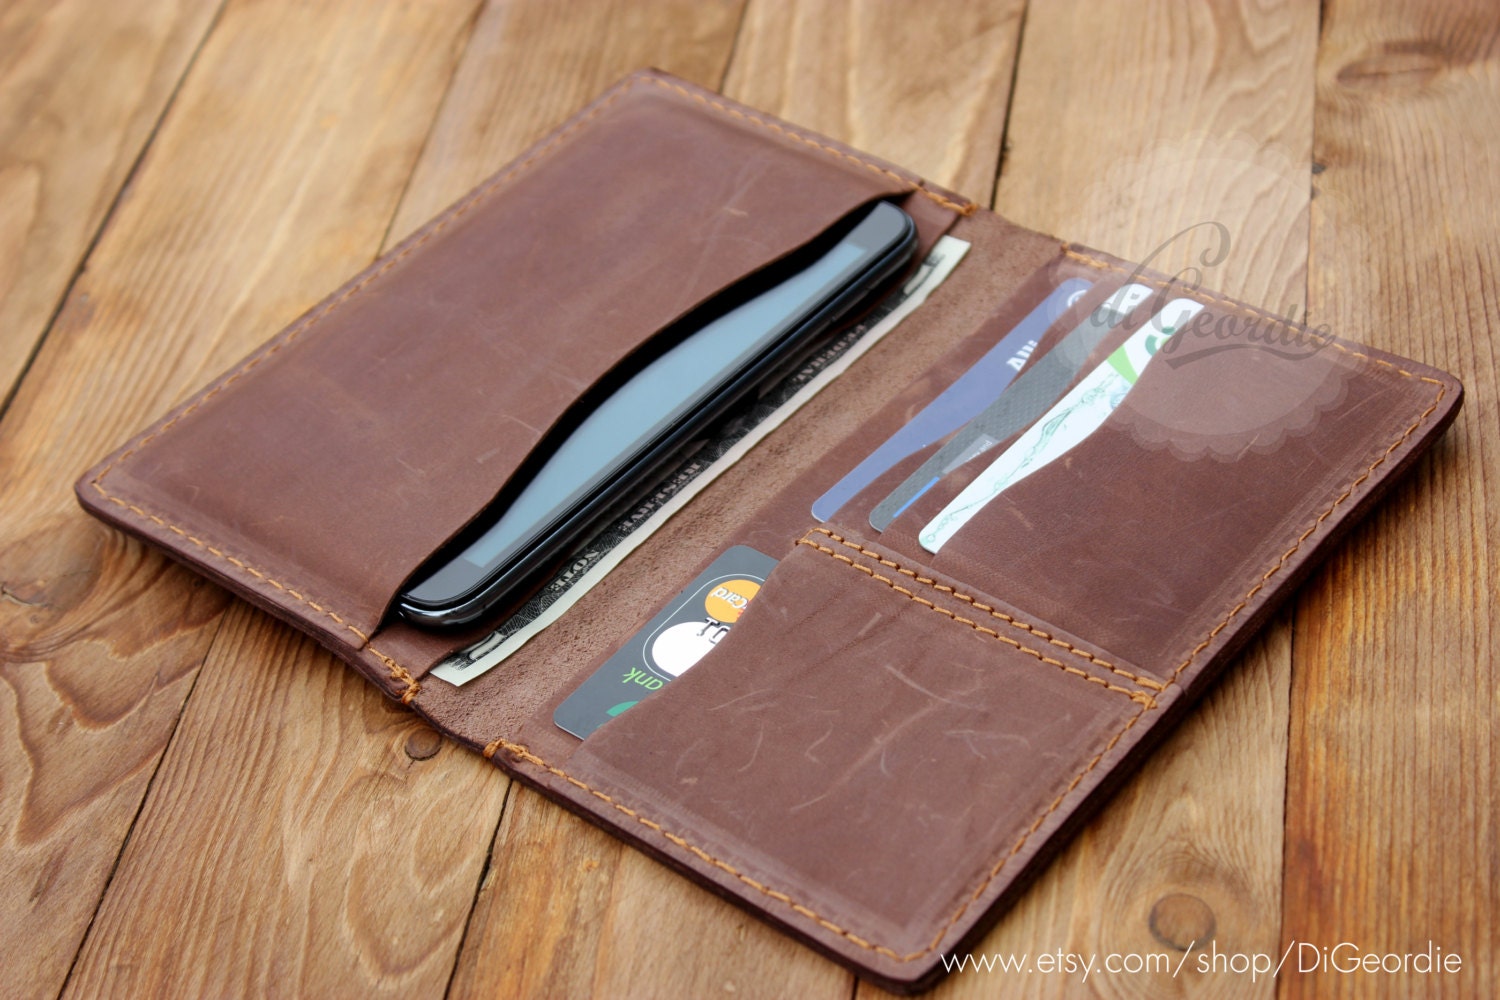 Mens leather wallet iPhone 6 clutch wallet billfold by DiGeordie